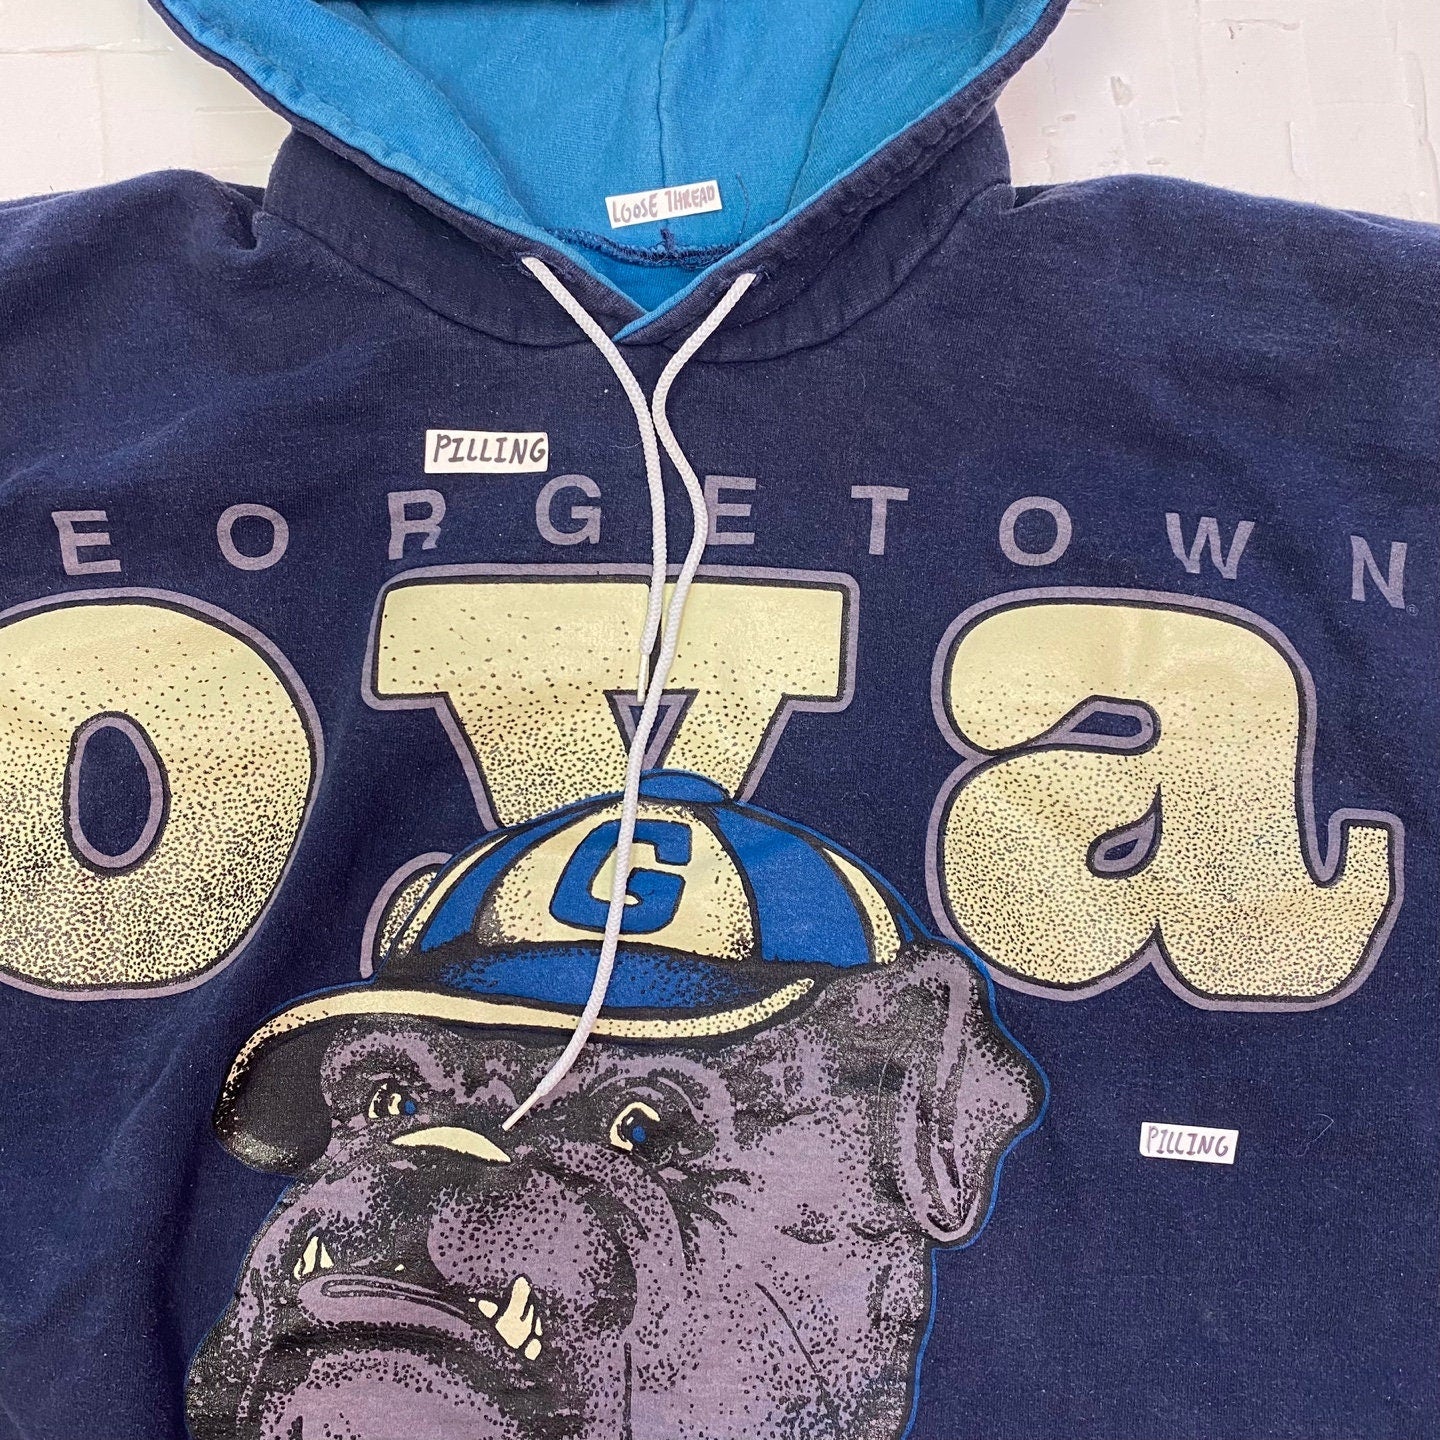 Vintage Georgetown University "Hoyas" Basketball Hoodie | Vintage Sweatshirt | Navy & Blue | Large Graphic | HOYAS | Men's Size L | ST-2077